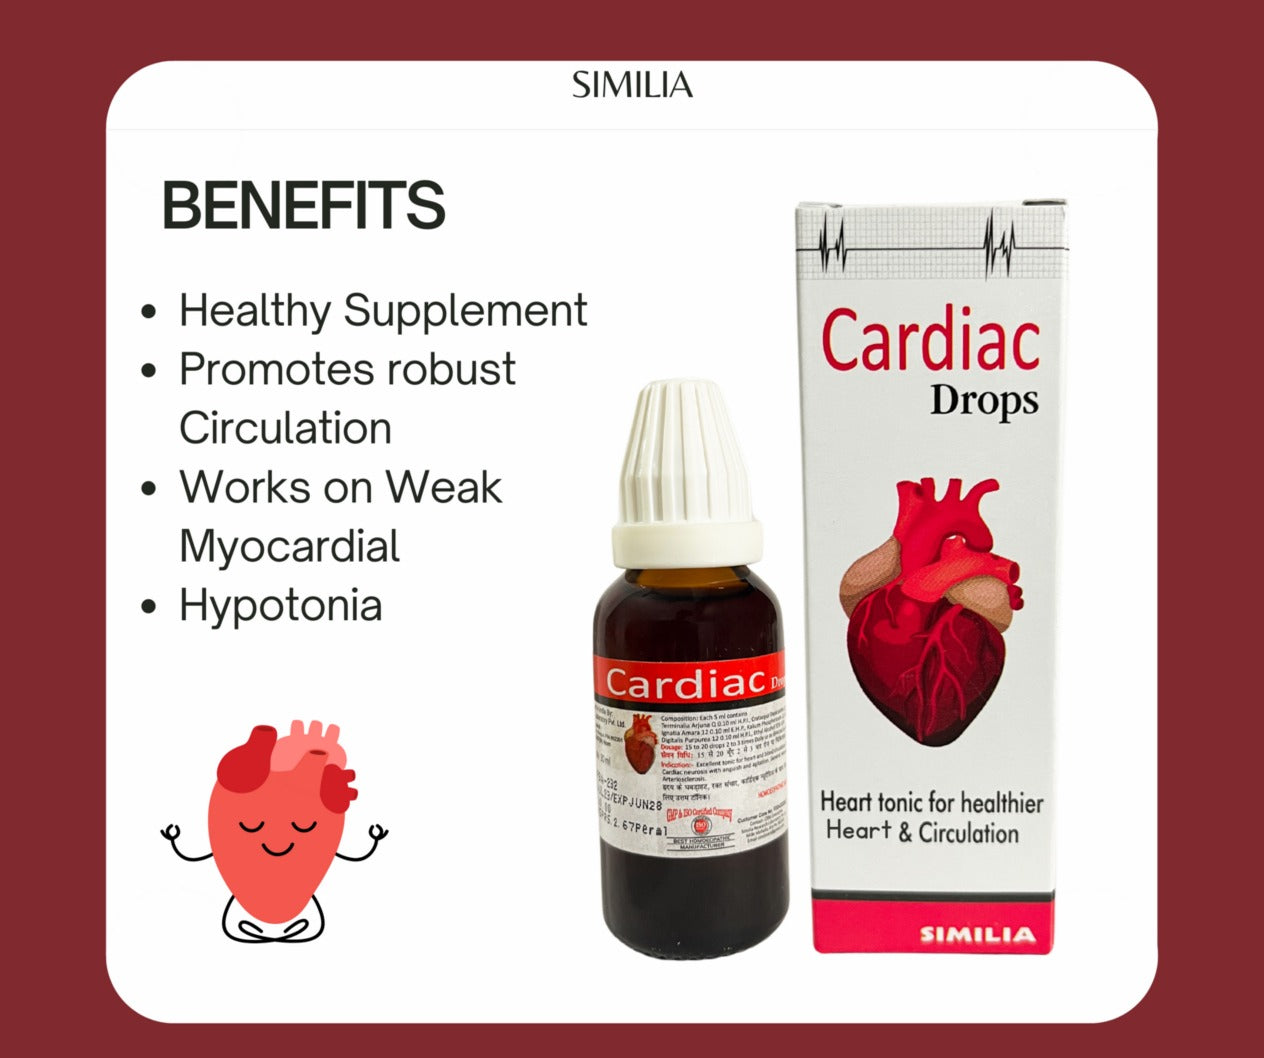 Similia Cardiac Drops 30 ml